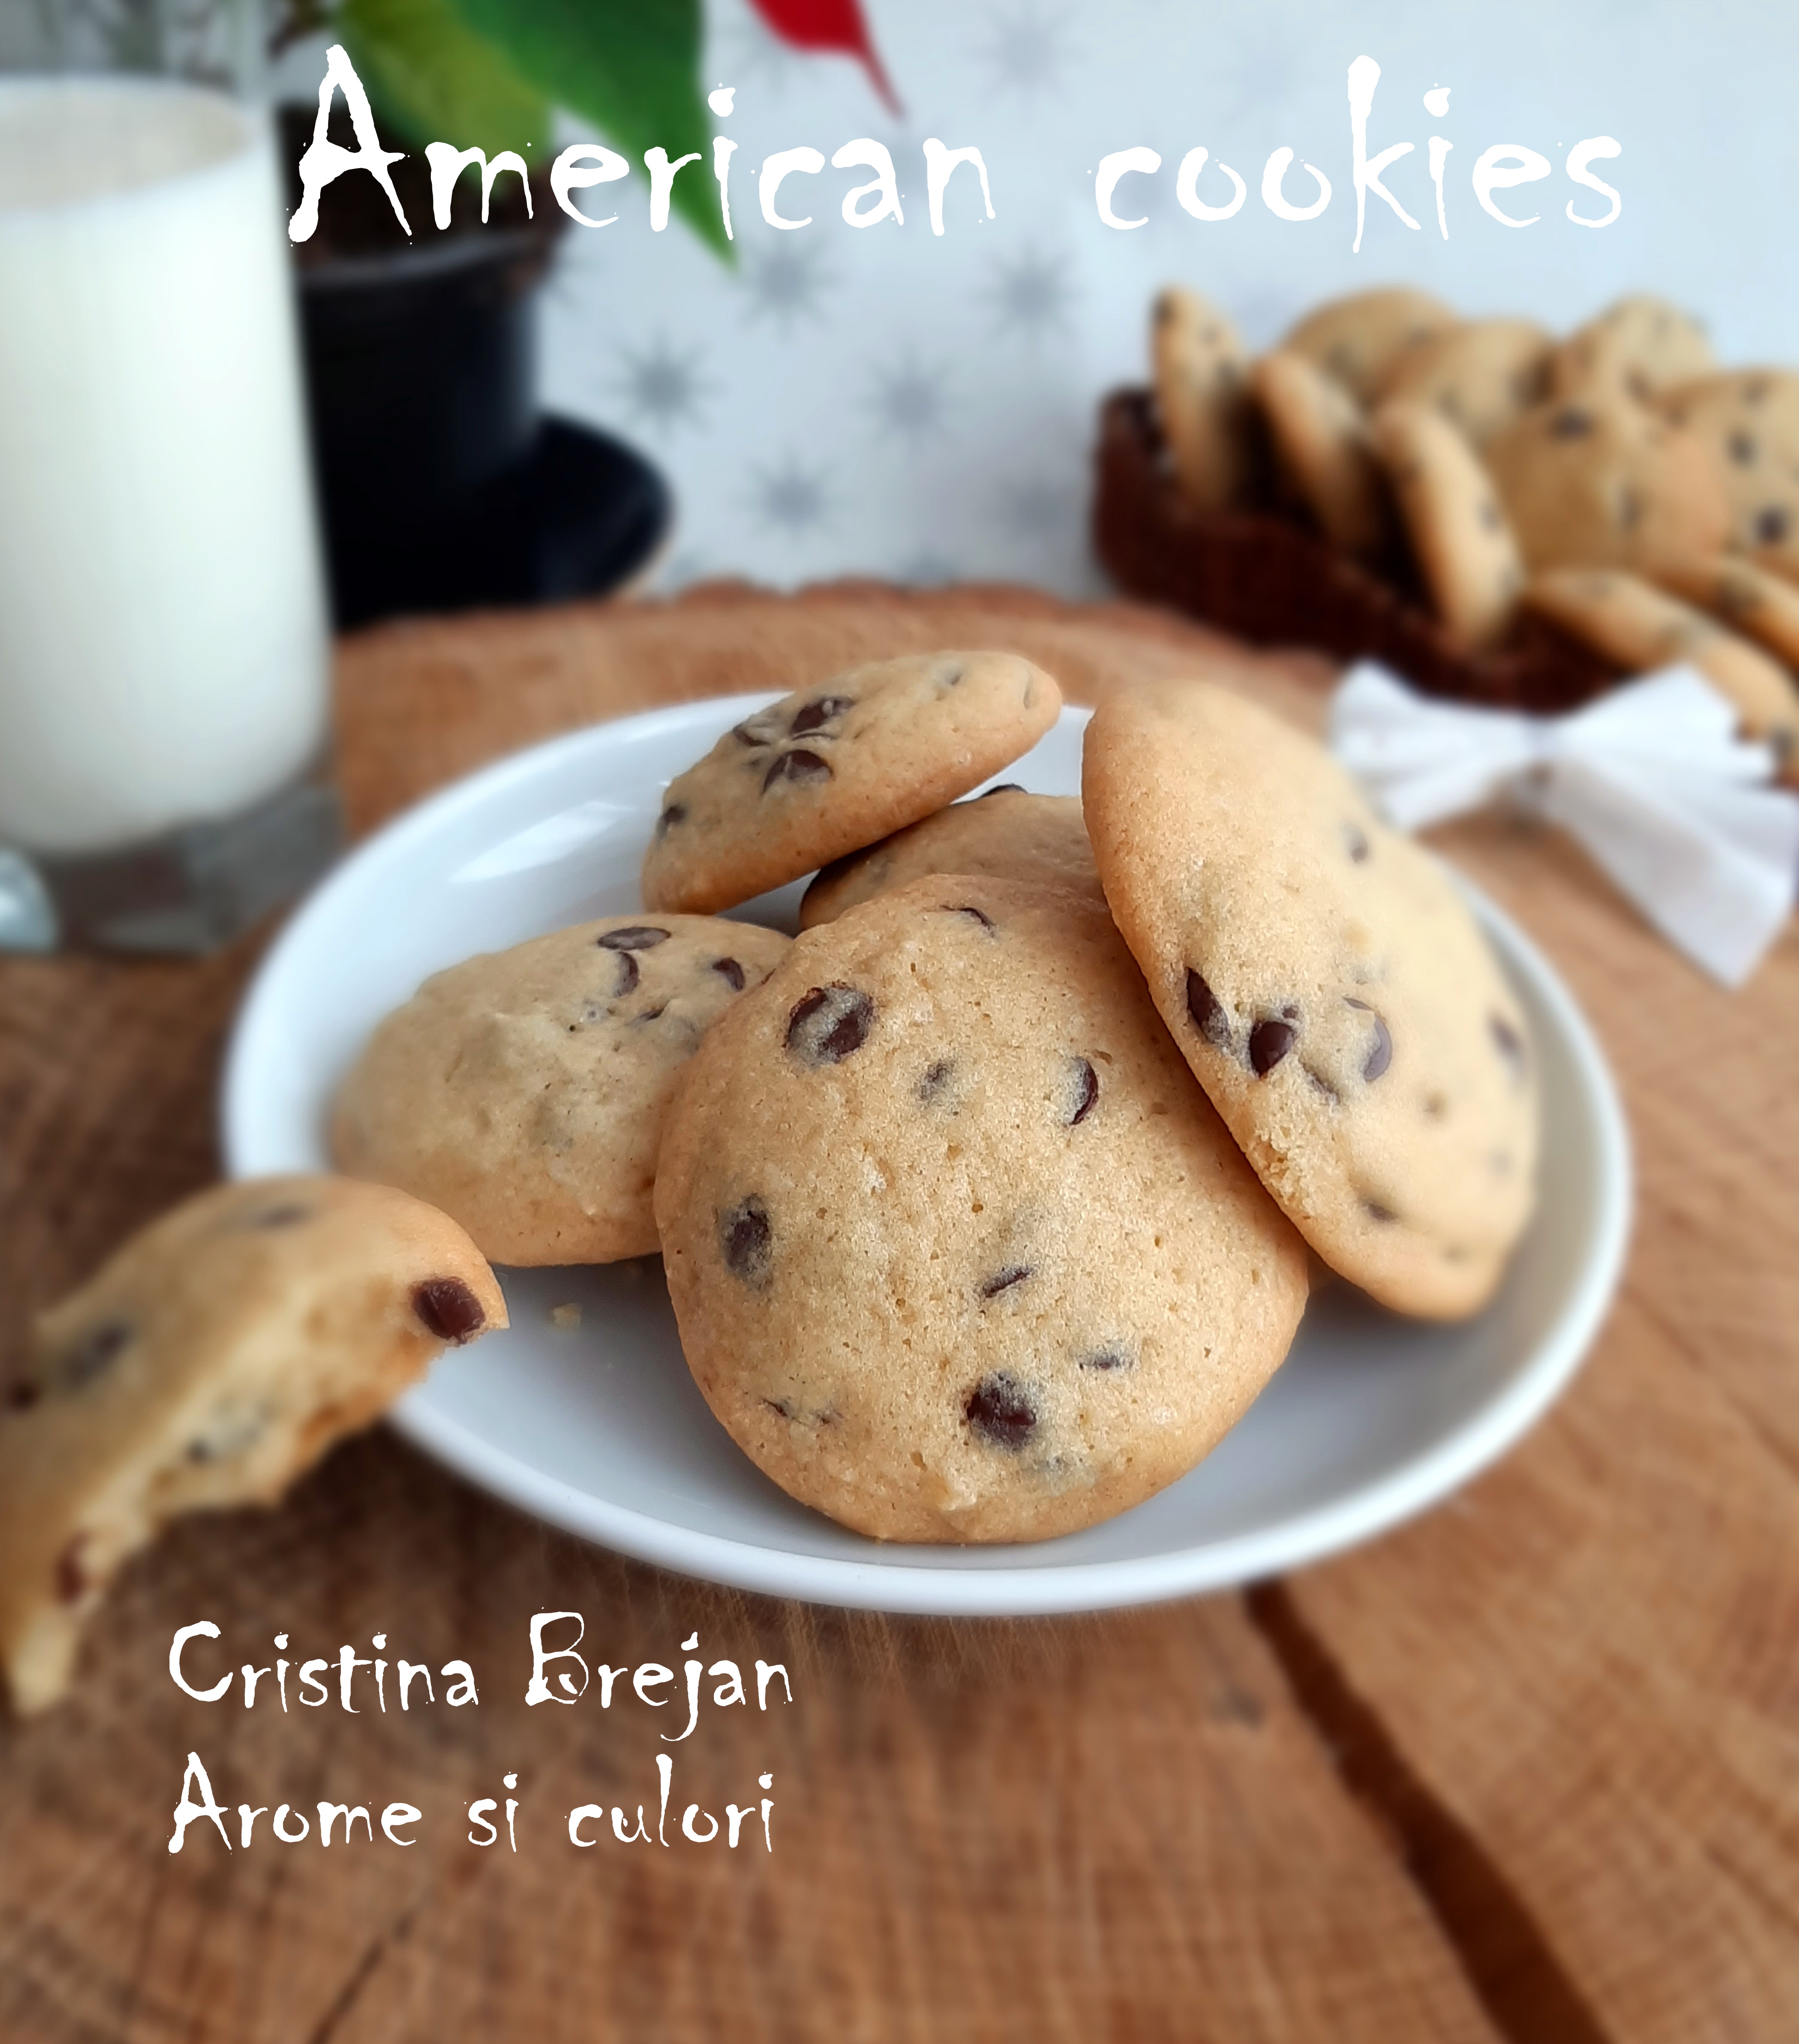 Desert American chocolate chip cookies